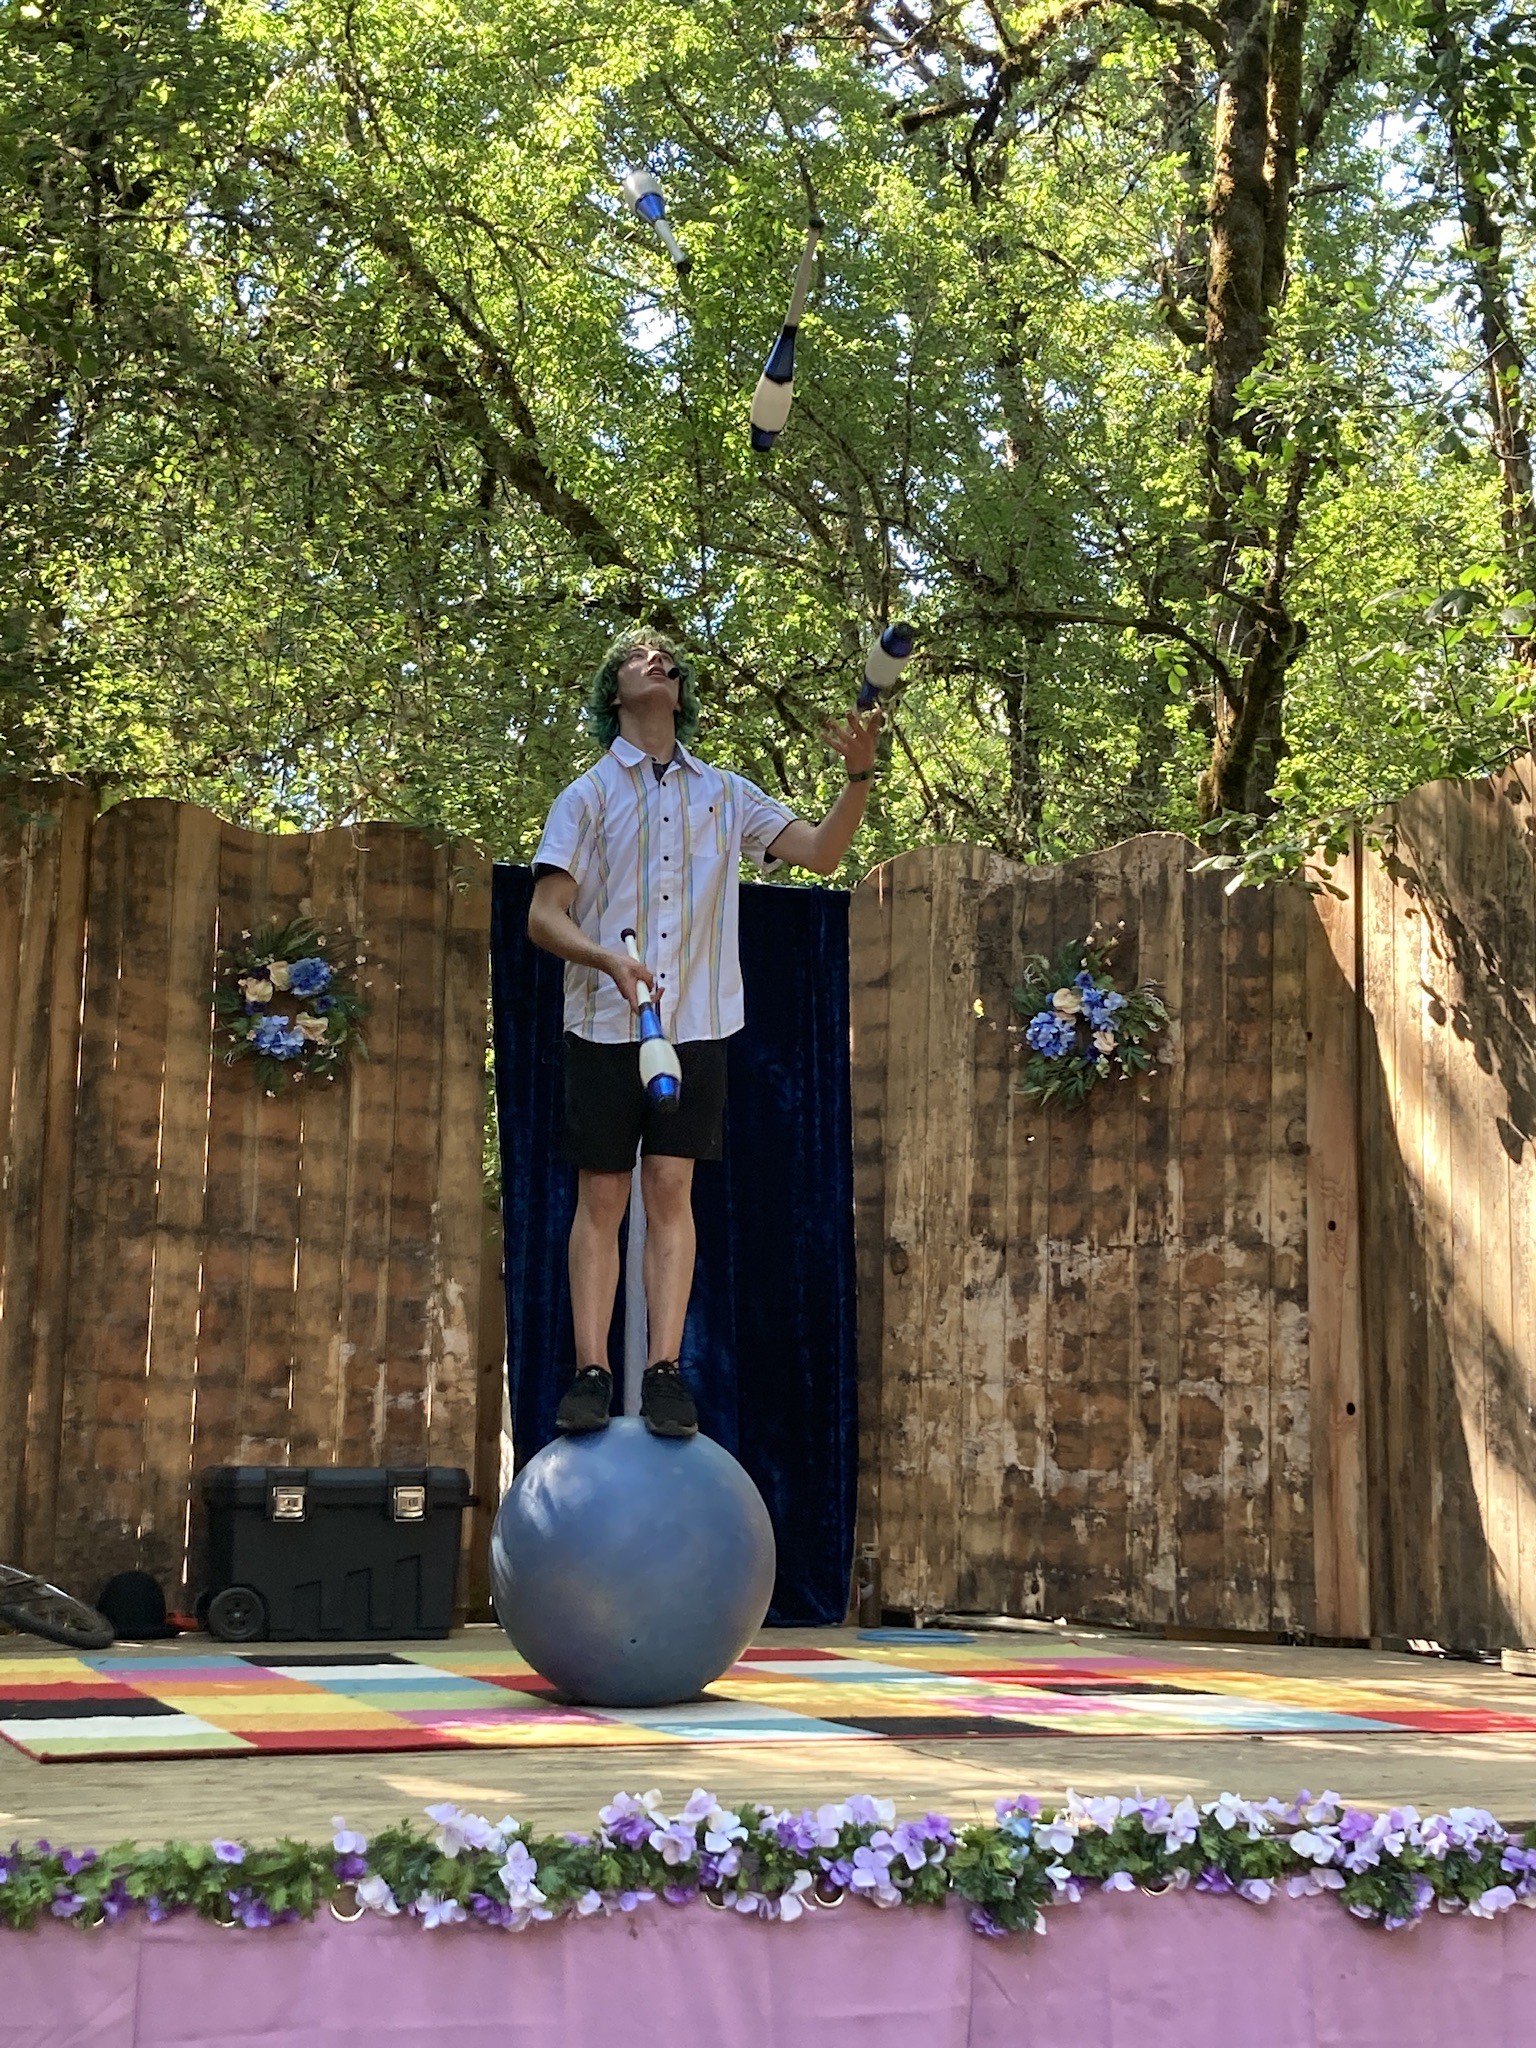 Kai Heartlife juggles on a balancing ball